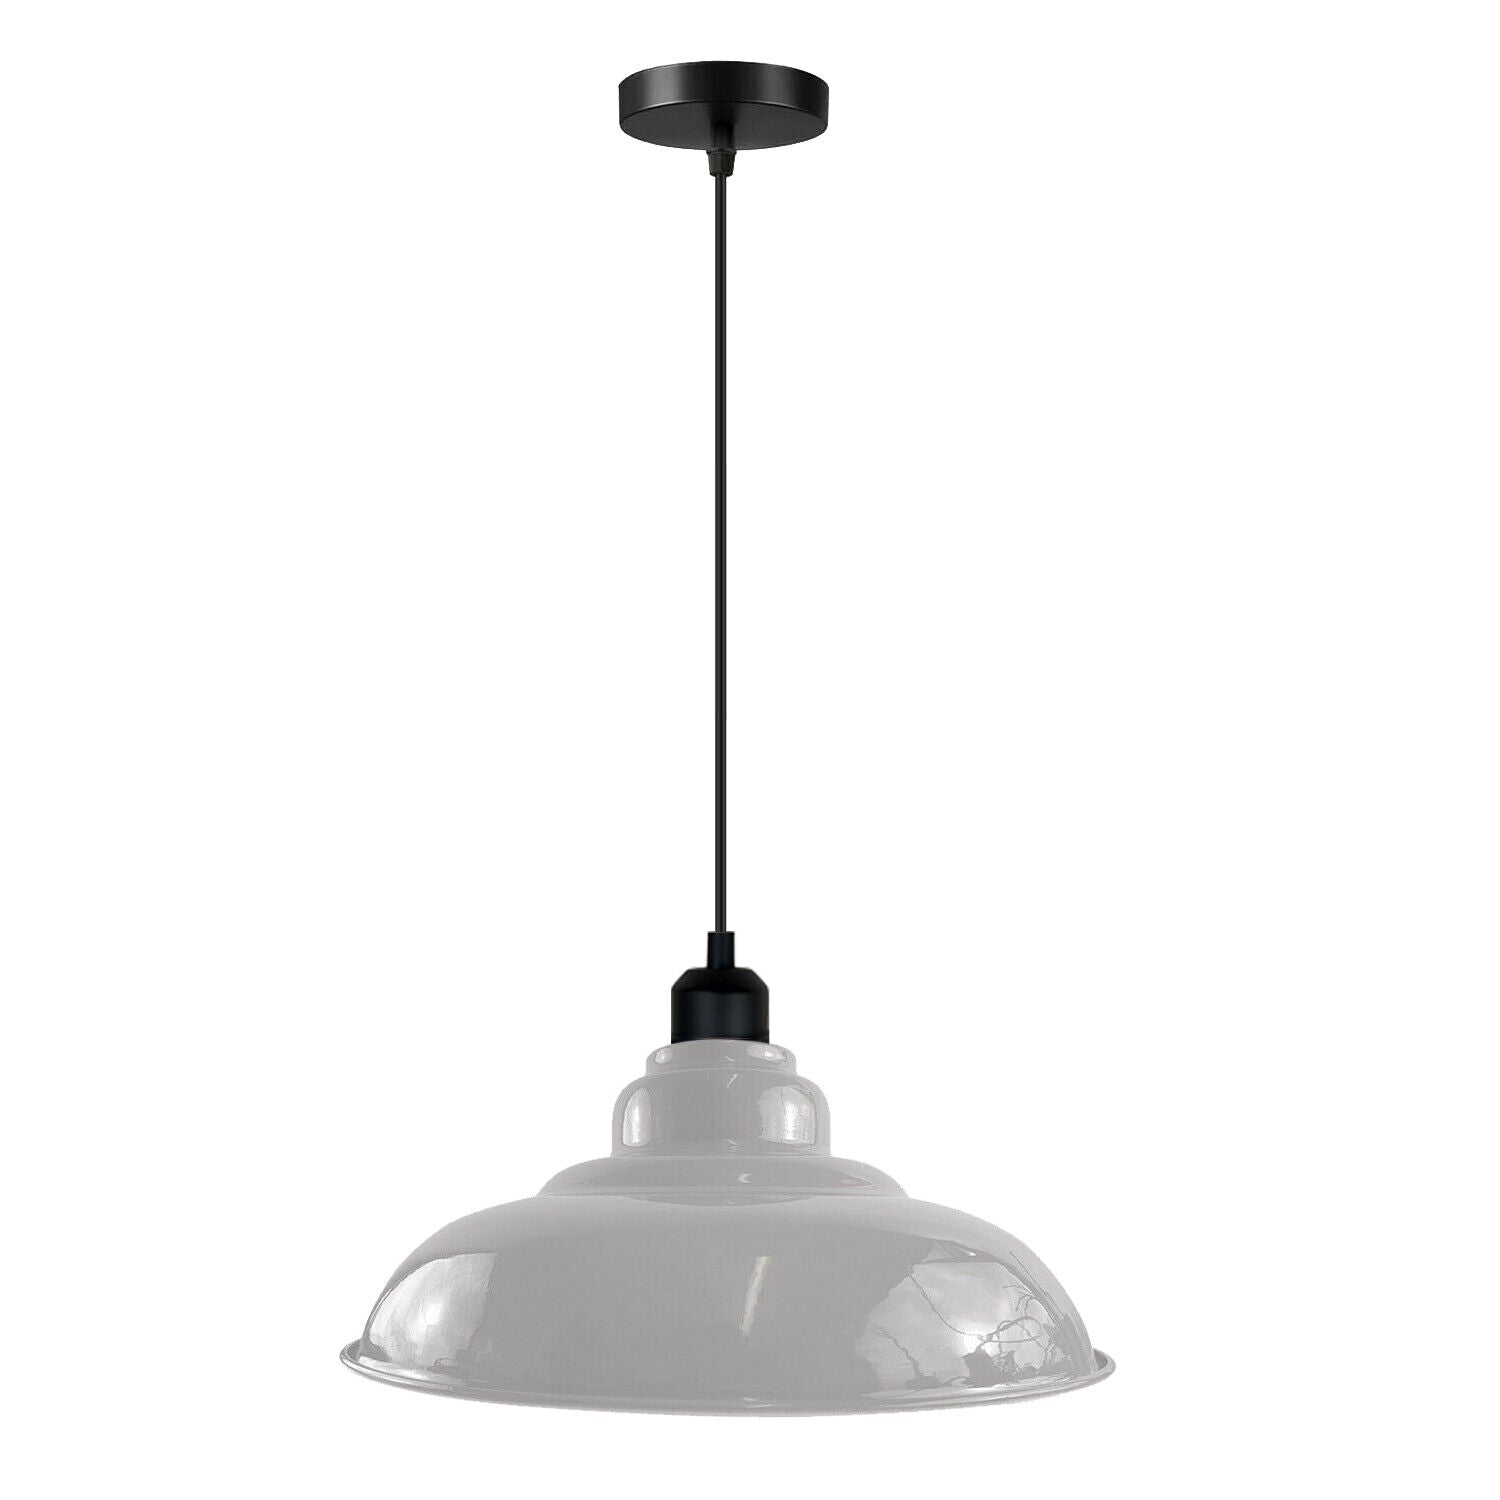 LEDSone industrial Vintage  32cm  White Pendant Retro Metal Lamp Shade E27 Uk Holder~3690 - LEDSone UK Ltd